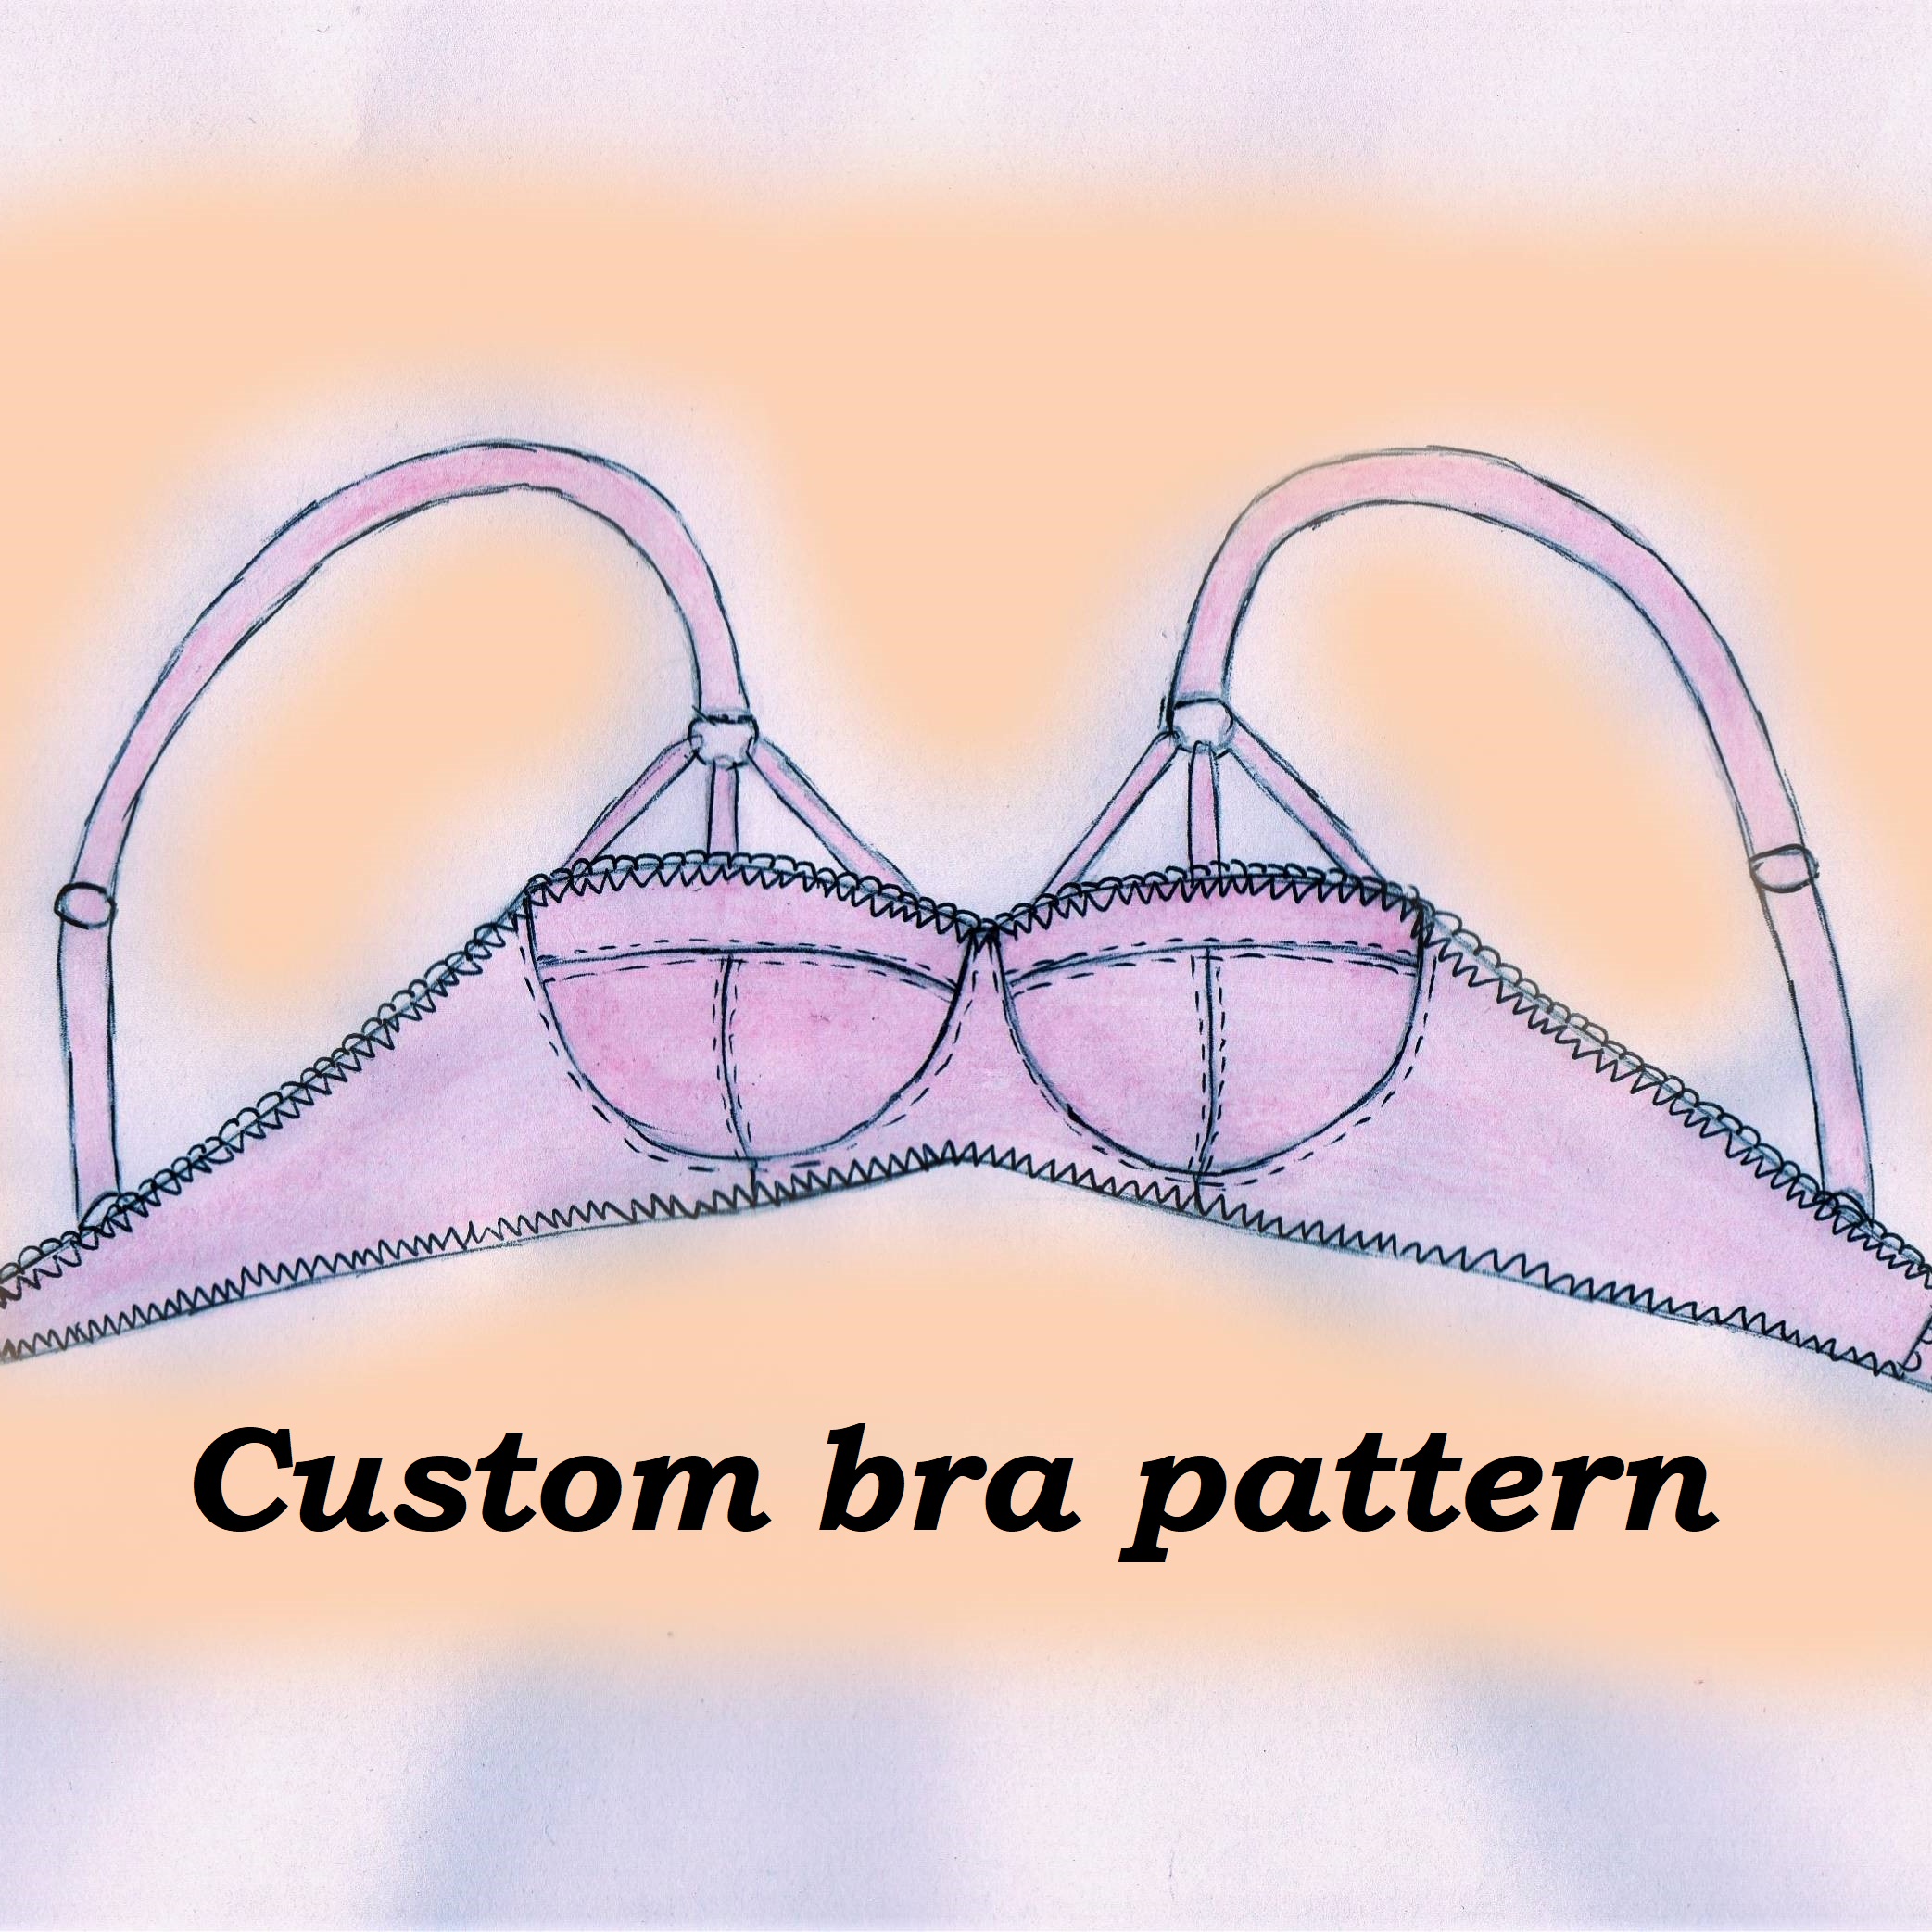 Wired bra pattern, Custom bra pattern, Underwire bra pattern